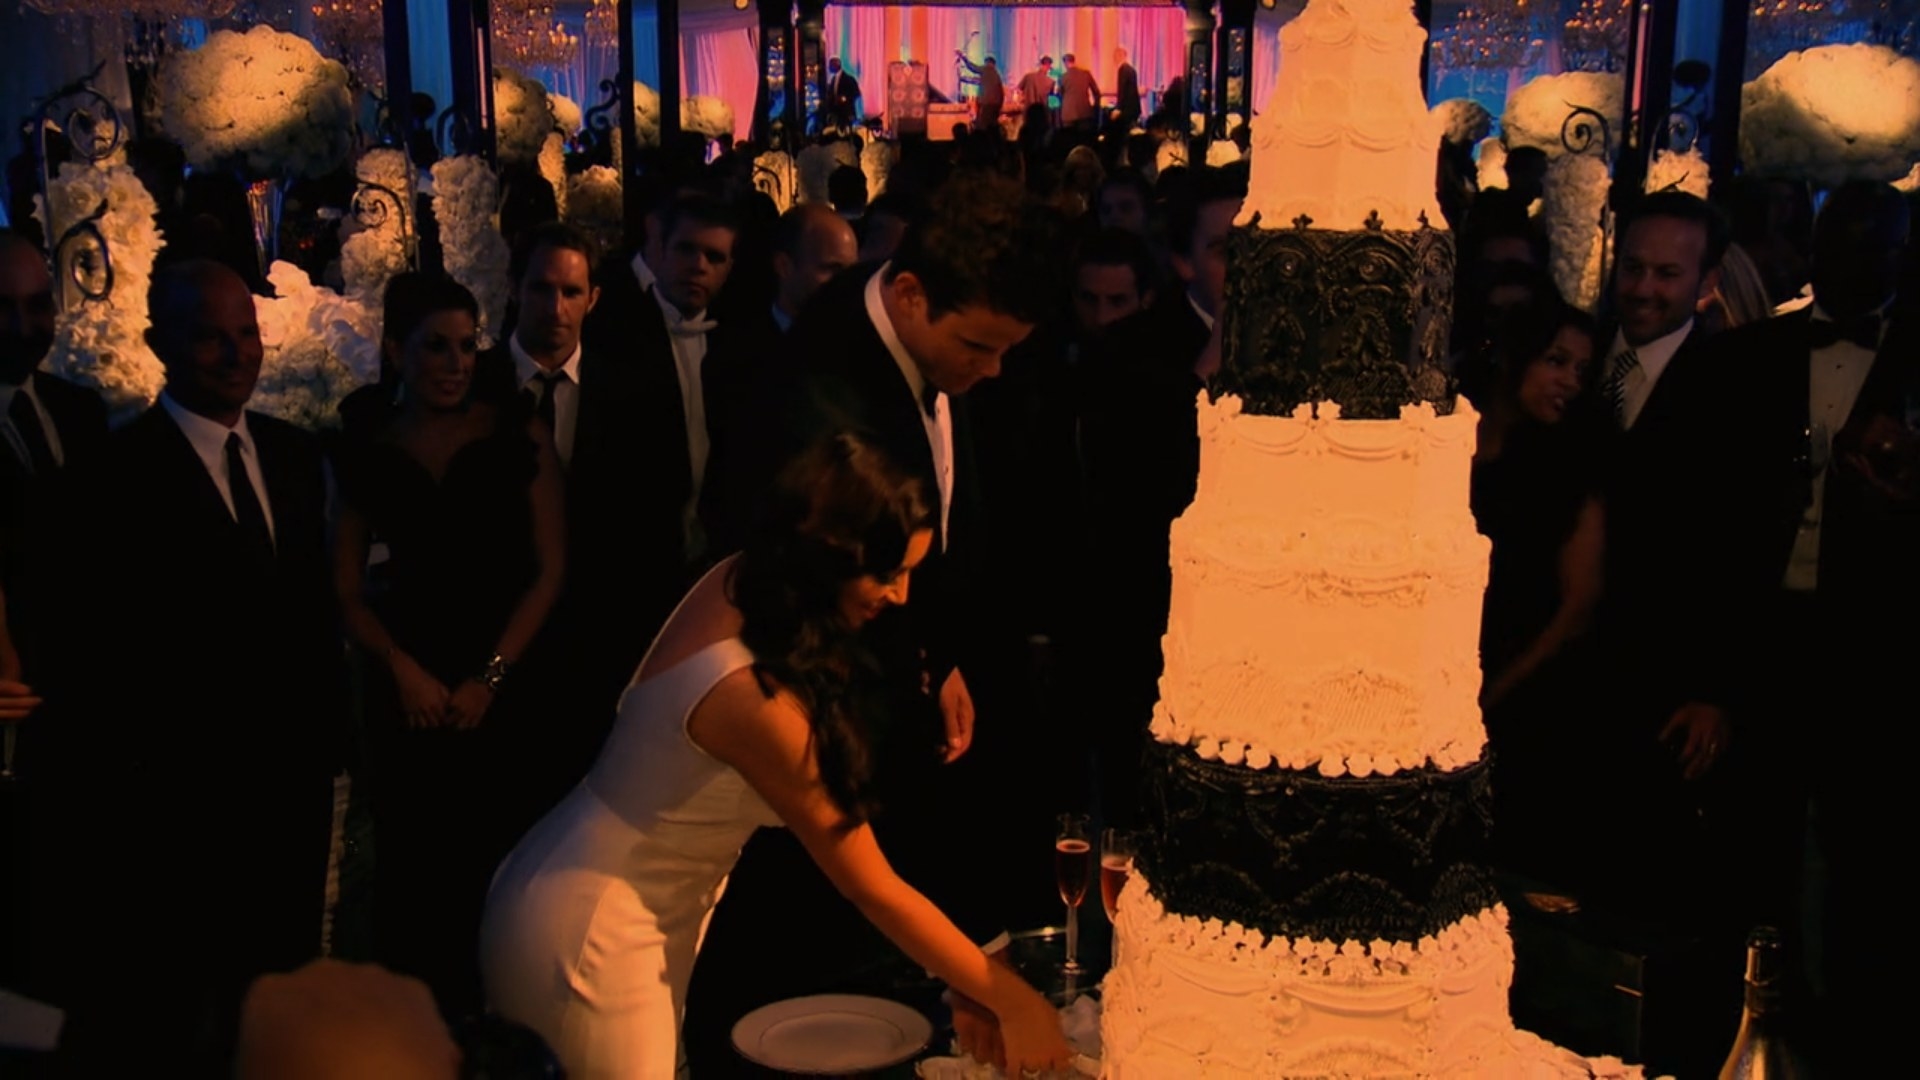 Kim Kardashian and Kris Humphries cutting their wedding cake